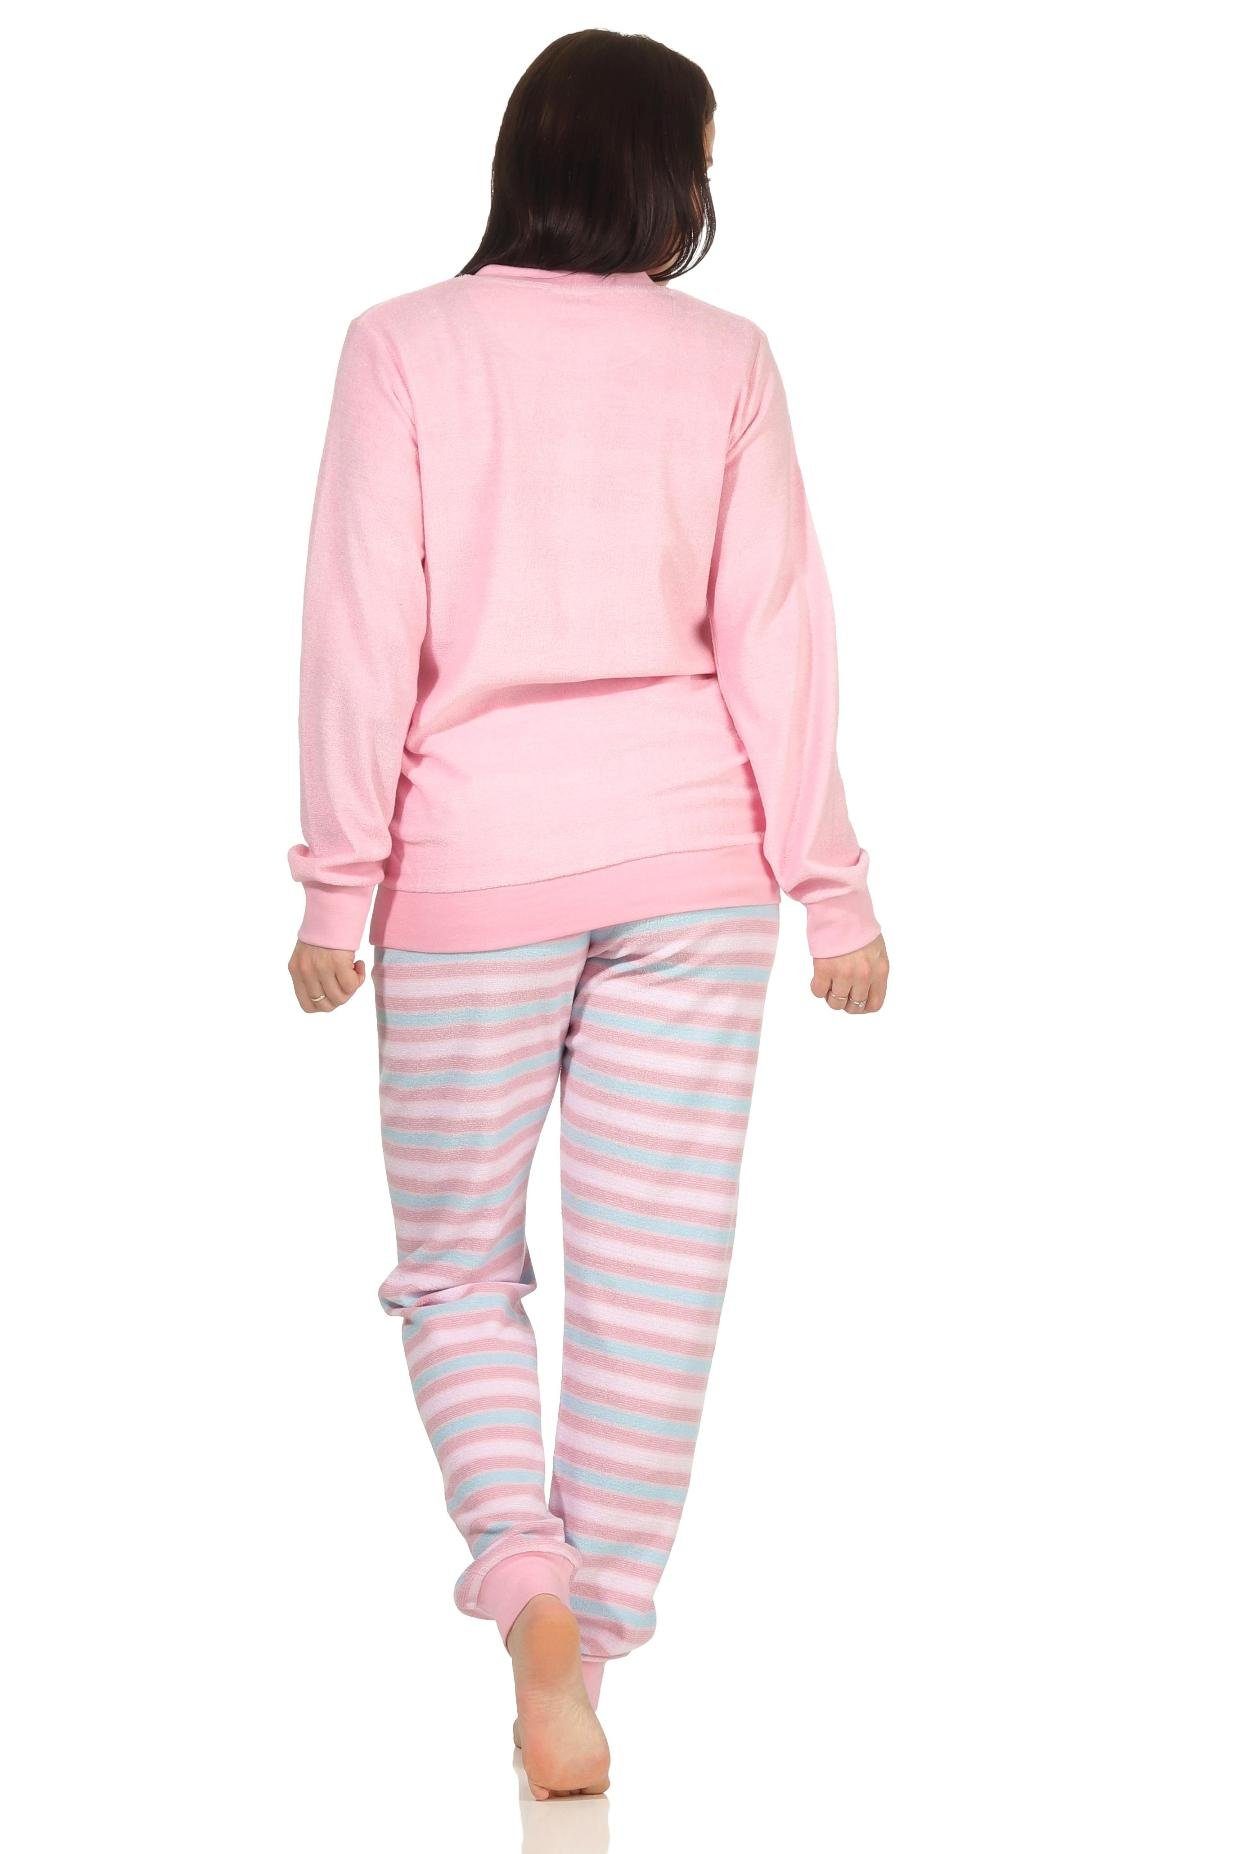 Creative by rosa Damen Bündchen Normann Schlafanzug Frottee FALSCH Pyjama mit gestreift Hose